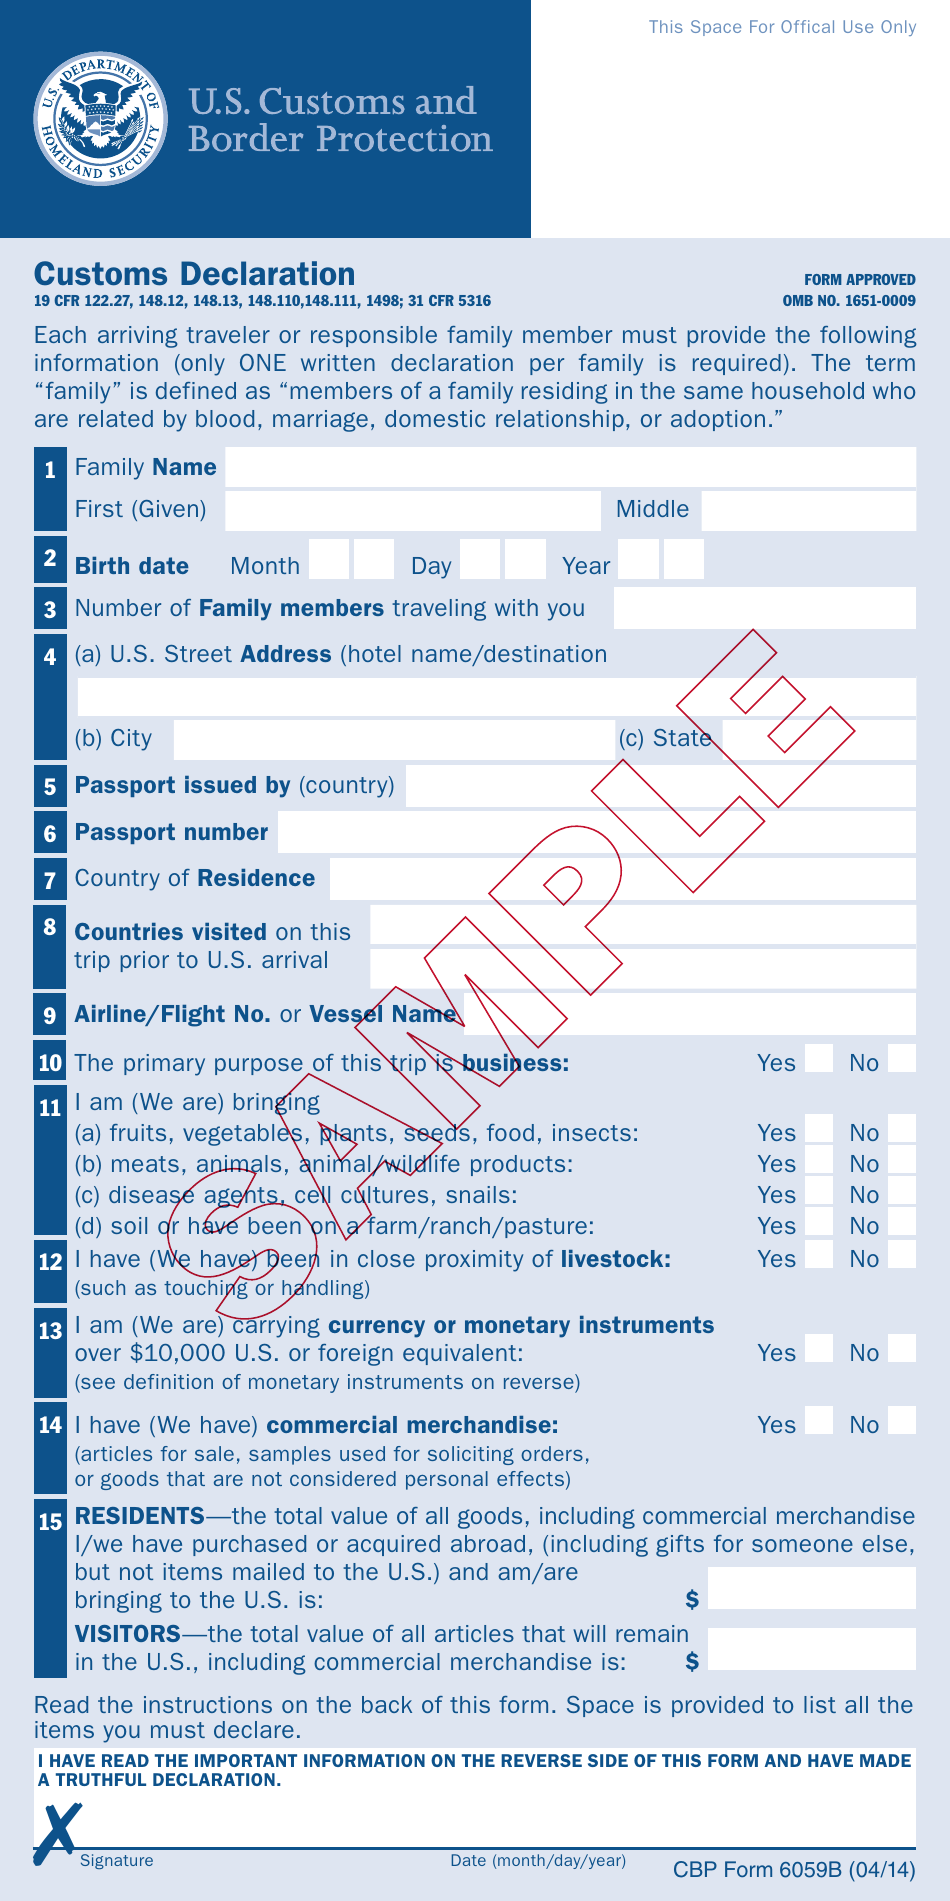 CBP Form 6059B Customs Declaration Form - Sample, Page 1